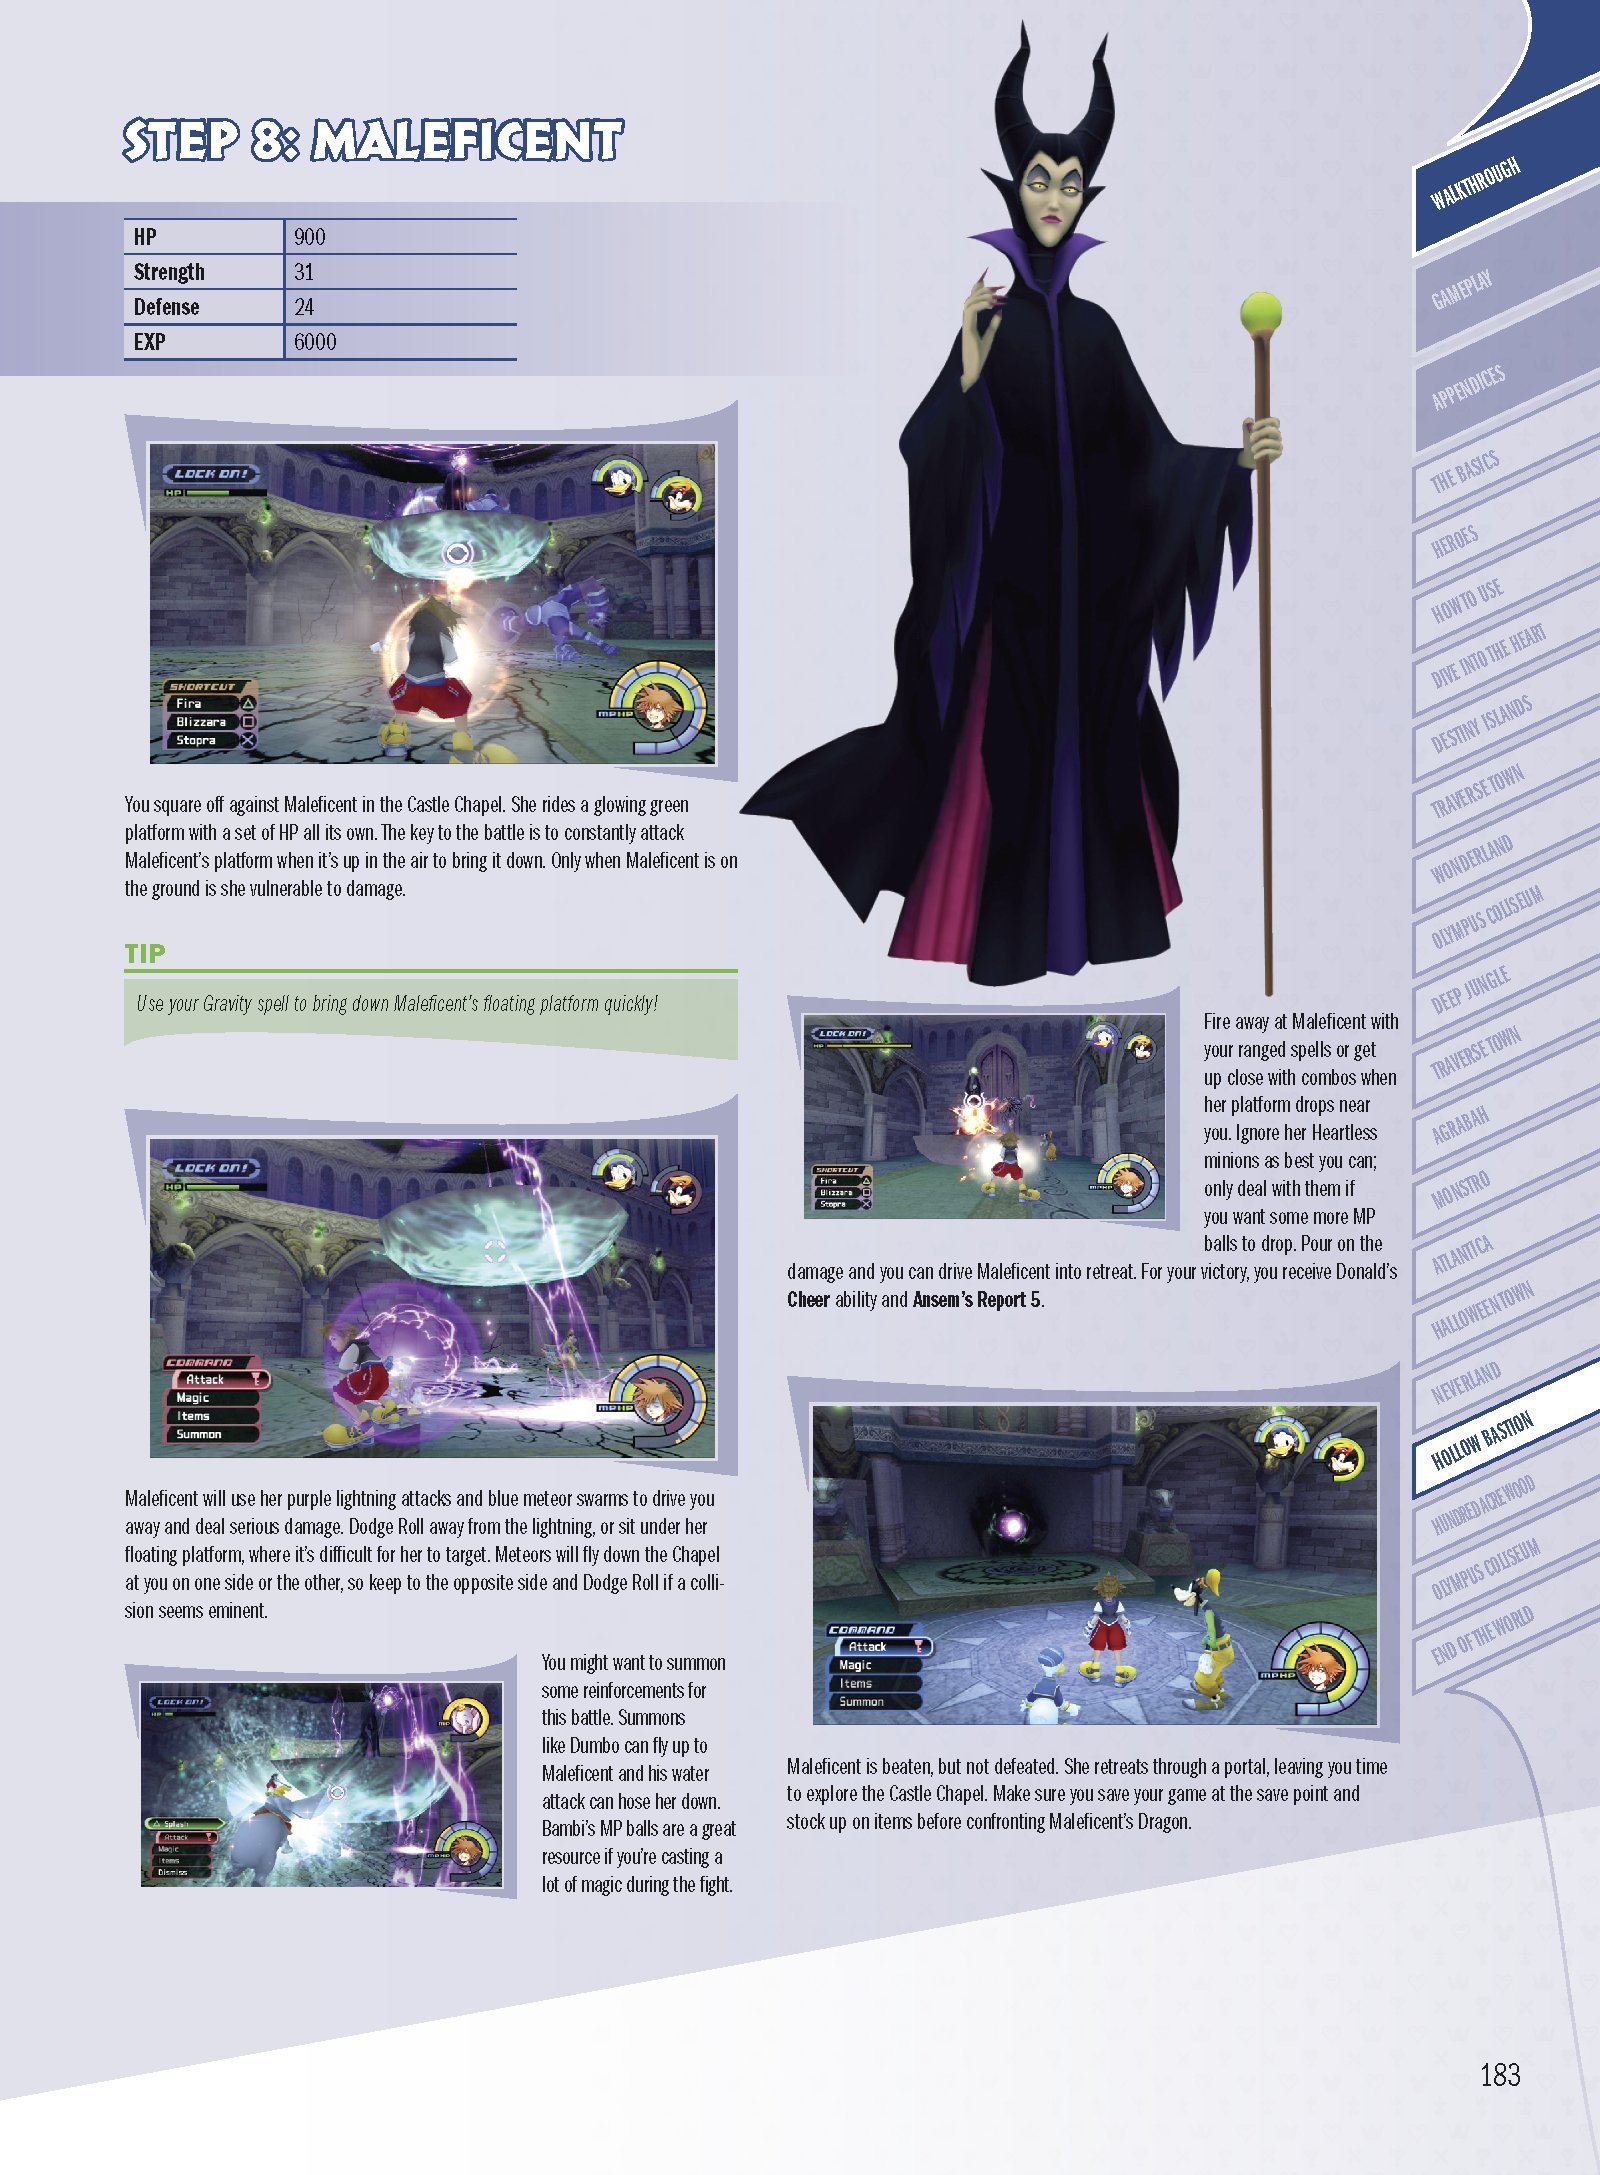 Kingdom Hearts Final Mix - Walkthrough - Kingdom Hearts HD 1.5 Remix Guide  - IGN